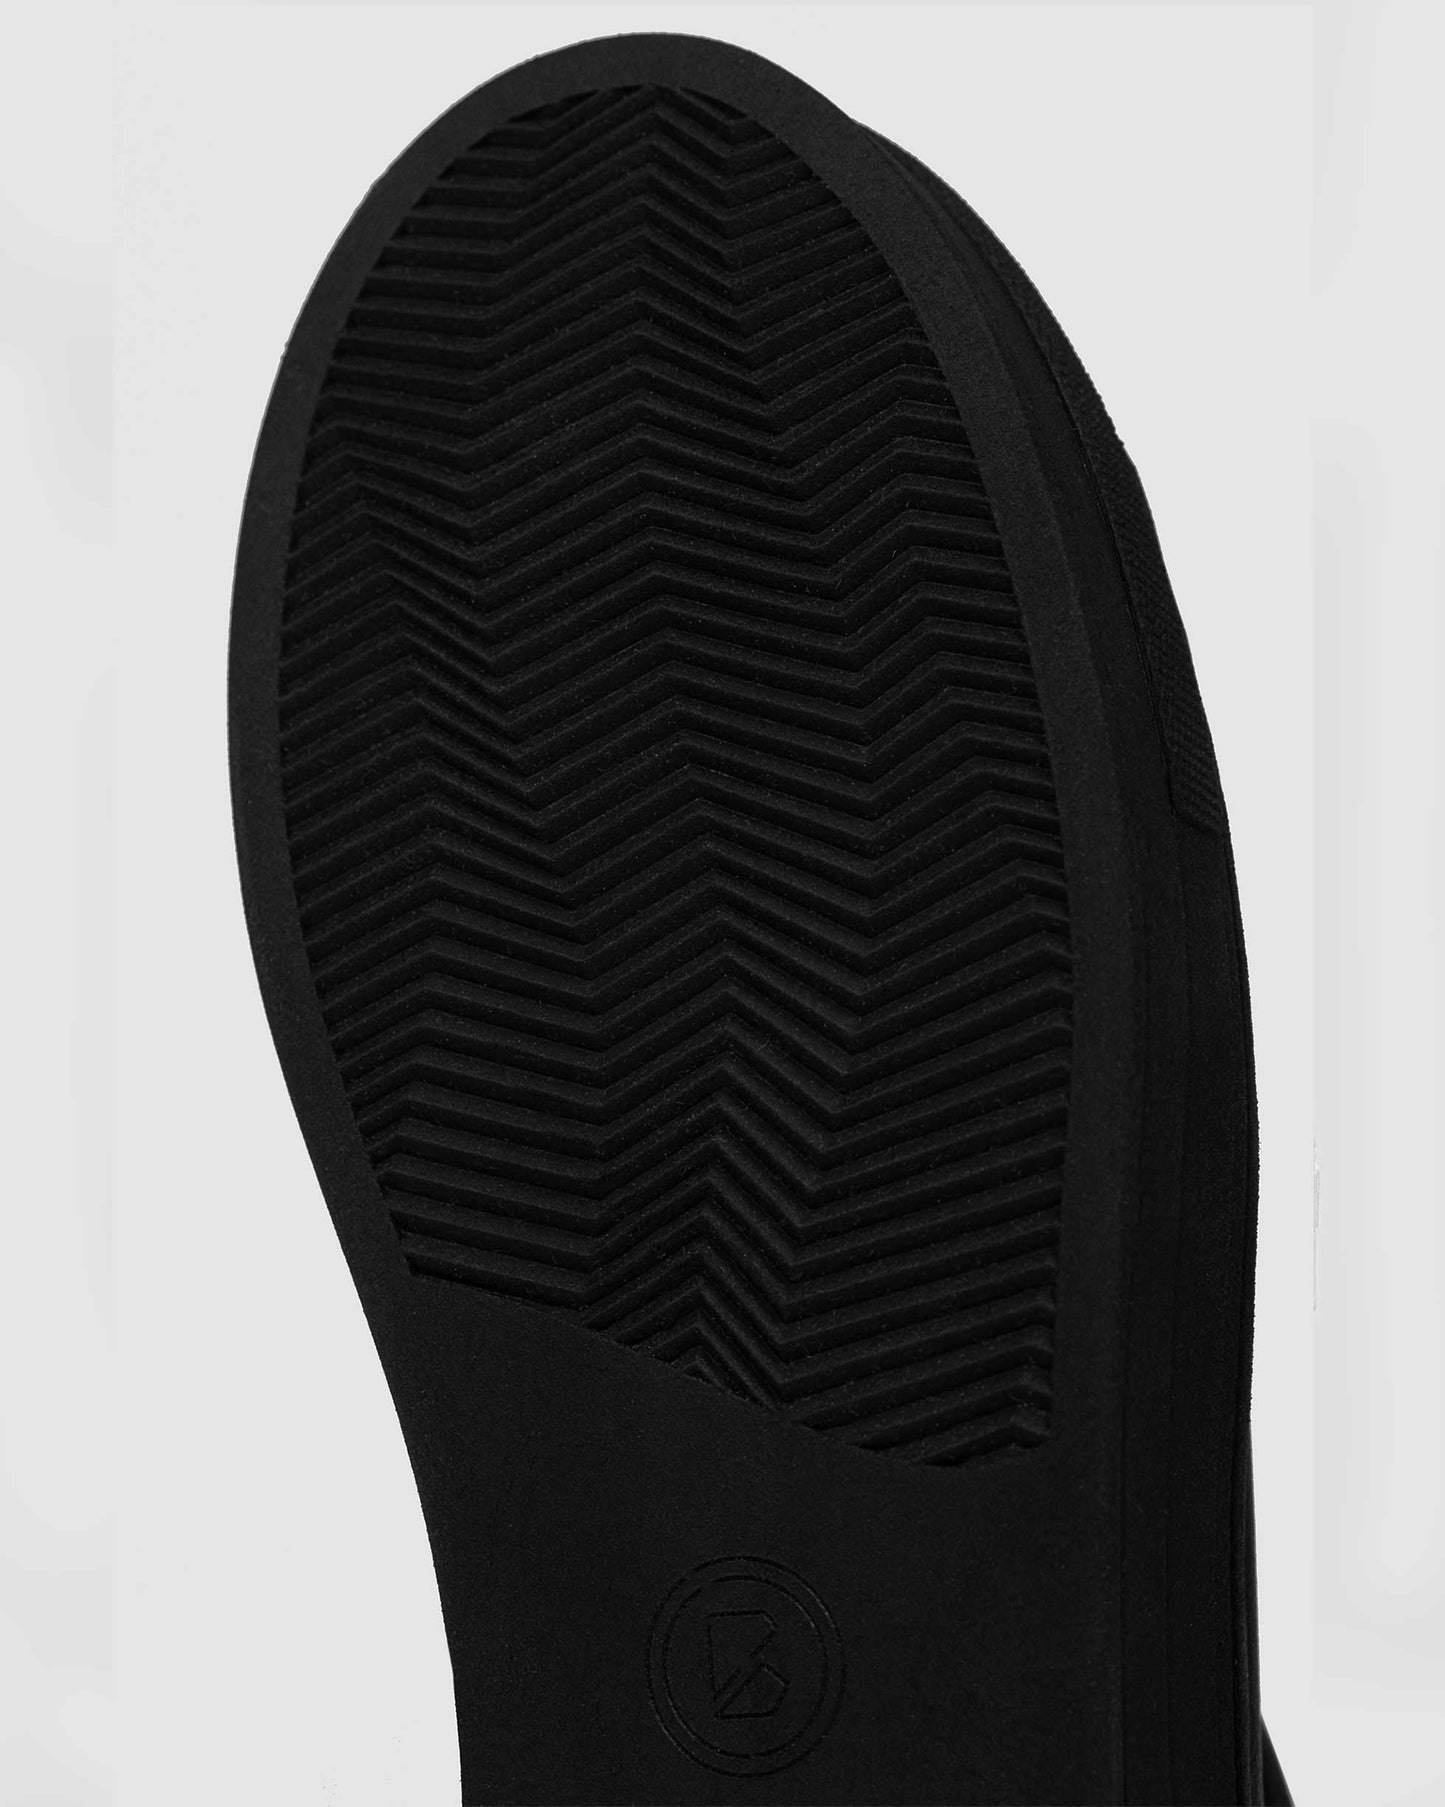 Bohema Sneakers Aware Black sneakers made of Vegea grape leather